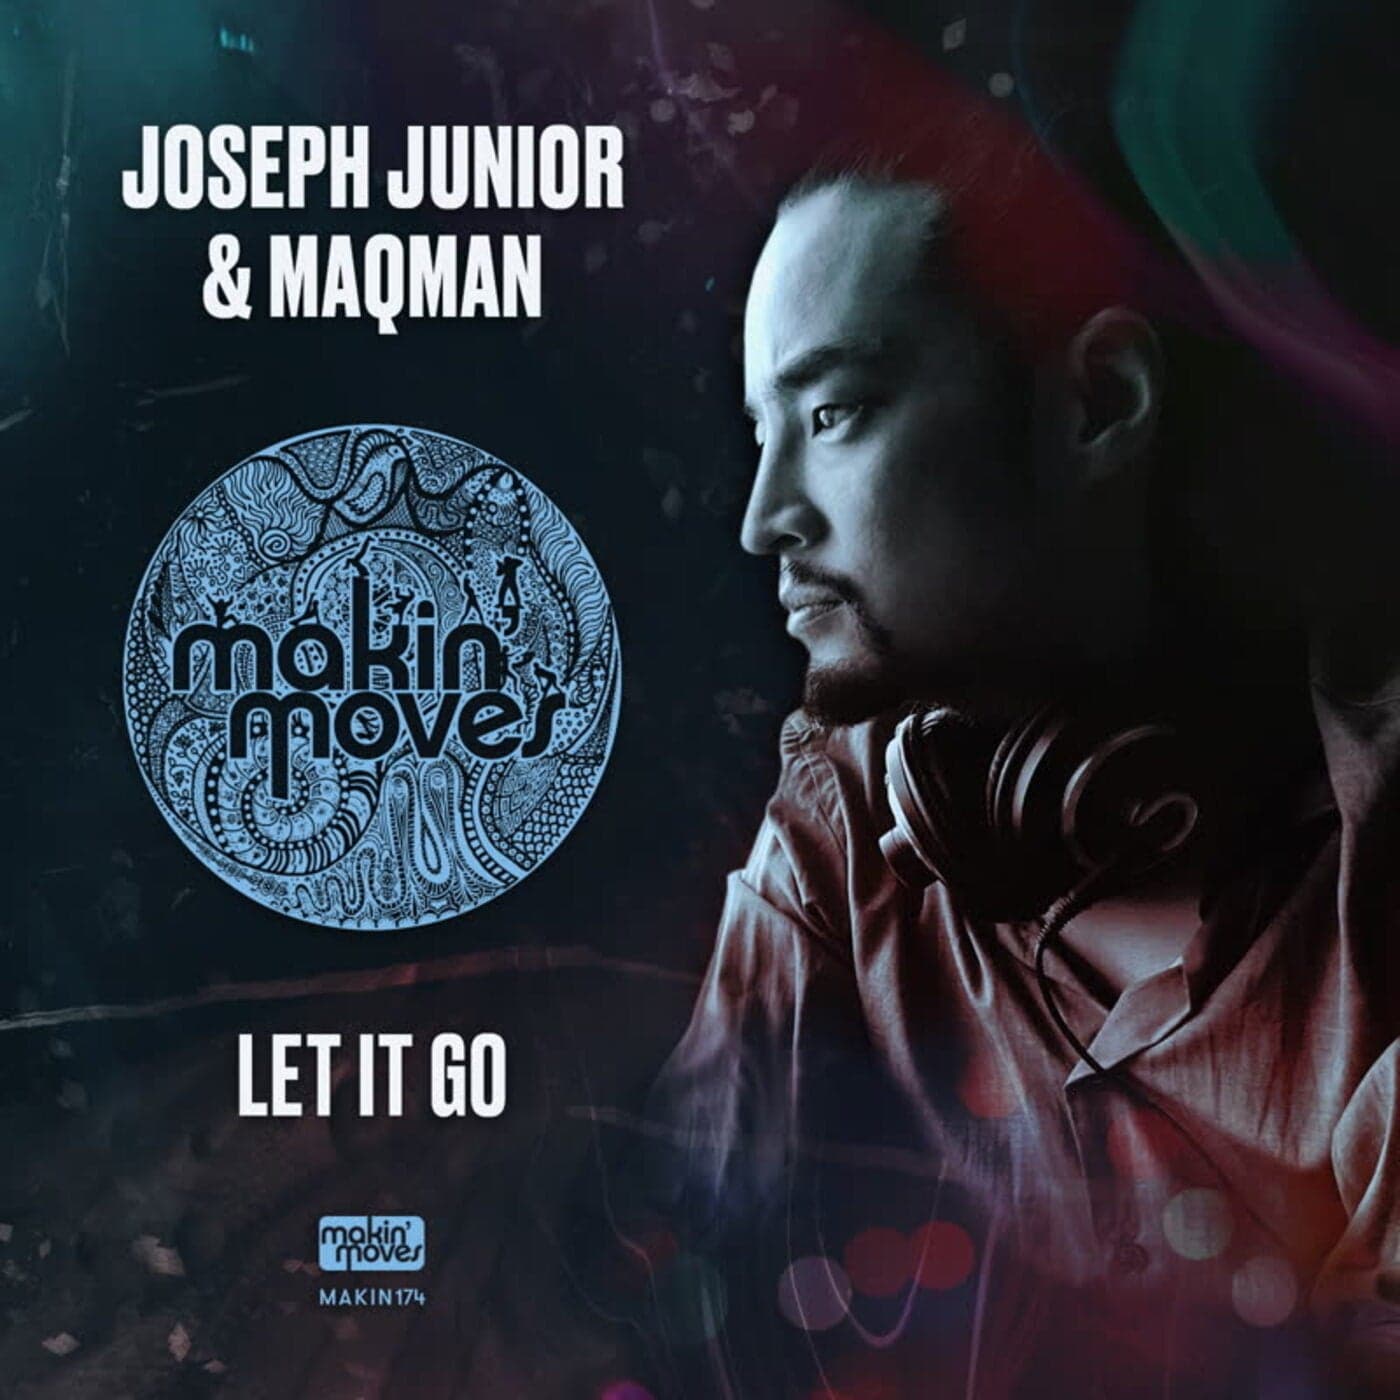 Download Maqman, Joseph Junior - Let It Go on Electrobuzz